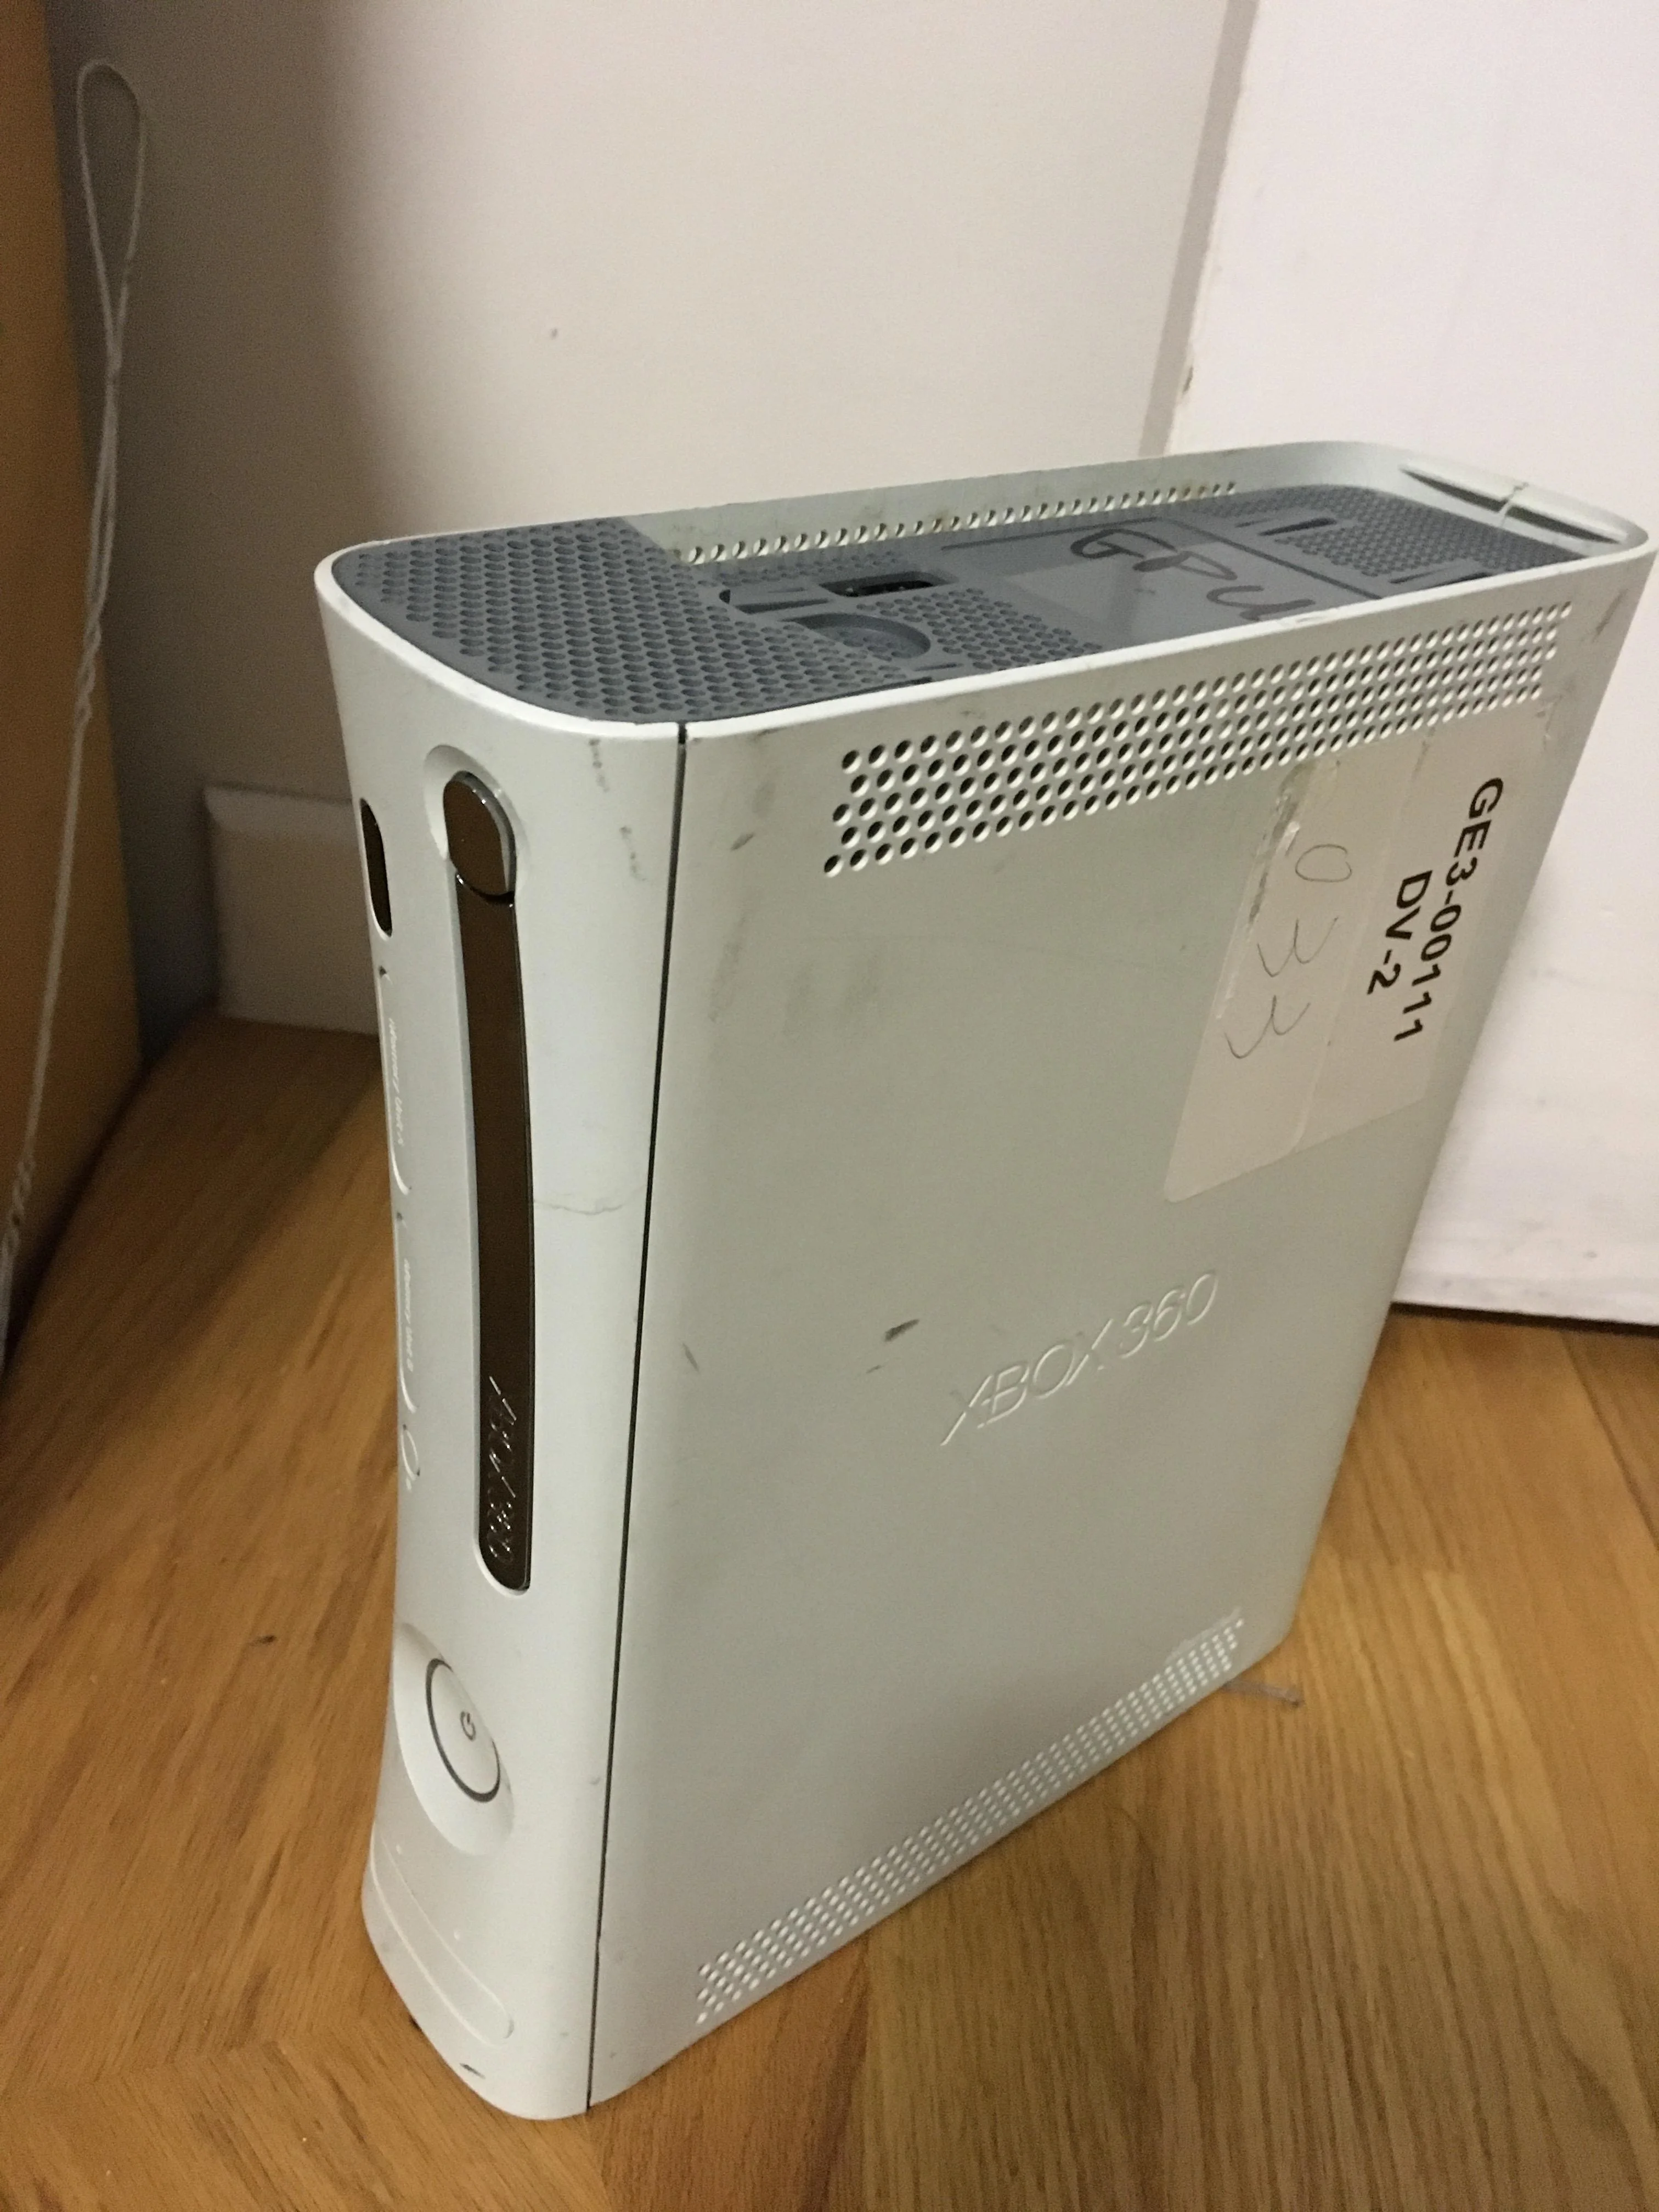  Microsoft Xbox 360 Zephyr DV-2 GE3-00111 Retail Console